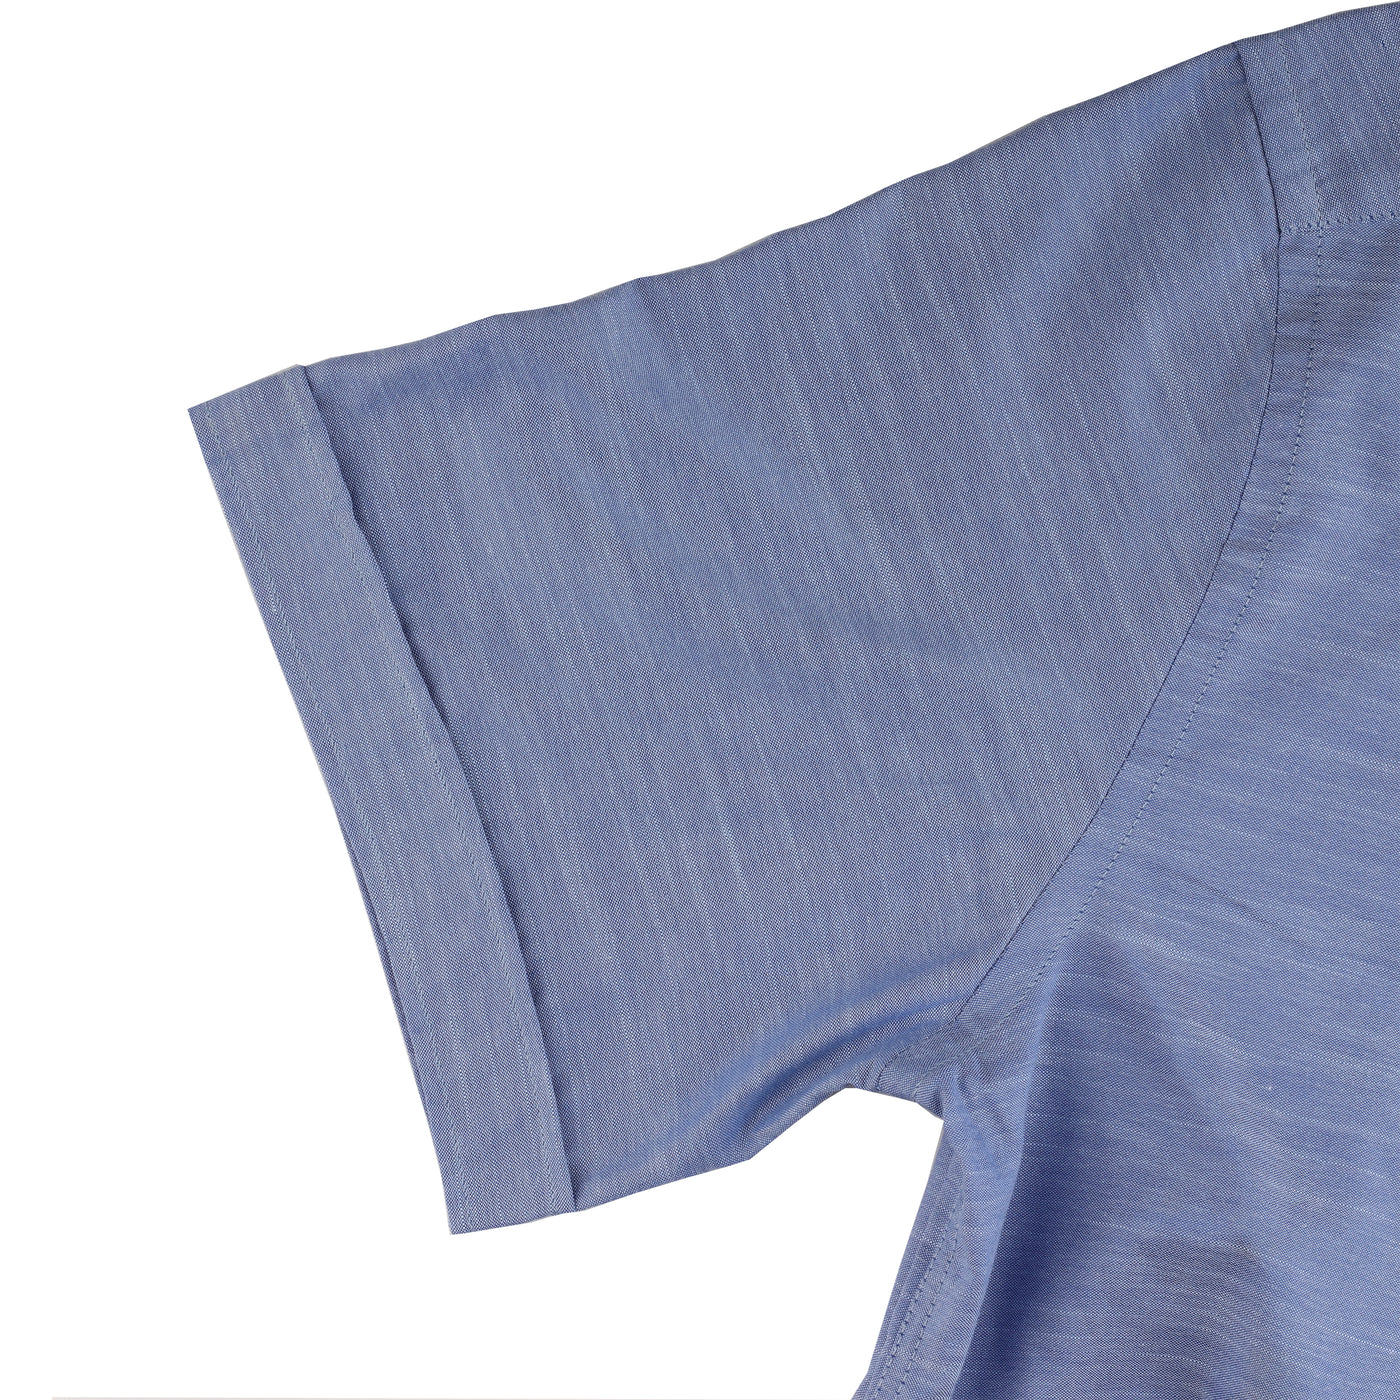 Short-sleeves Sky-Blue shirt.